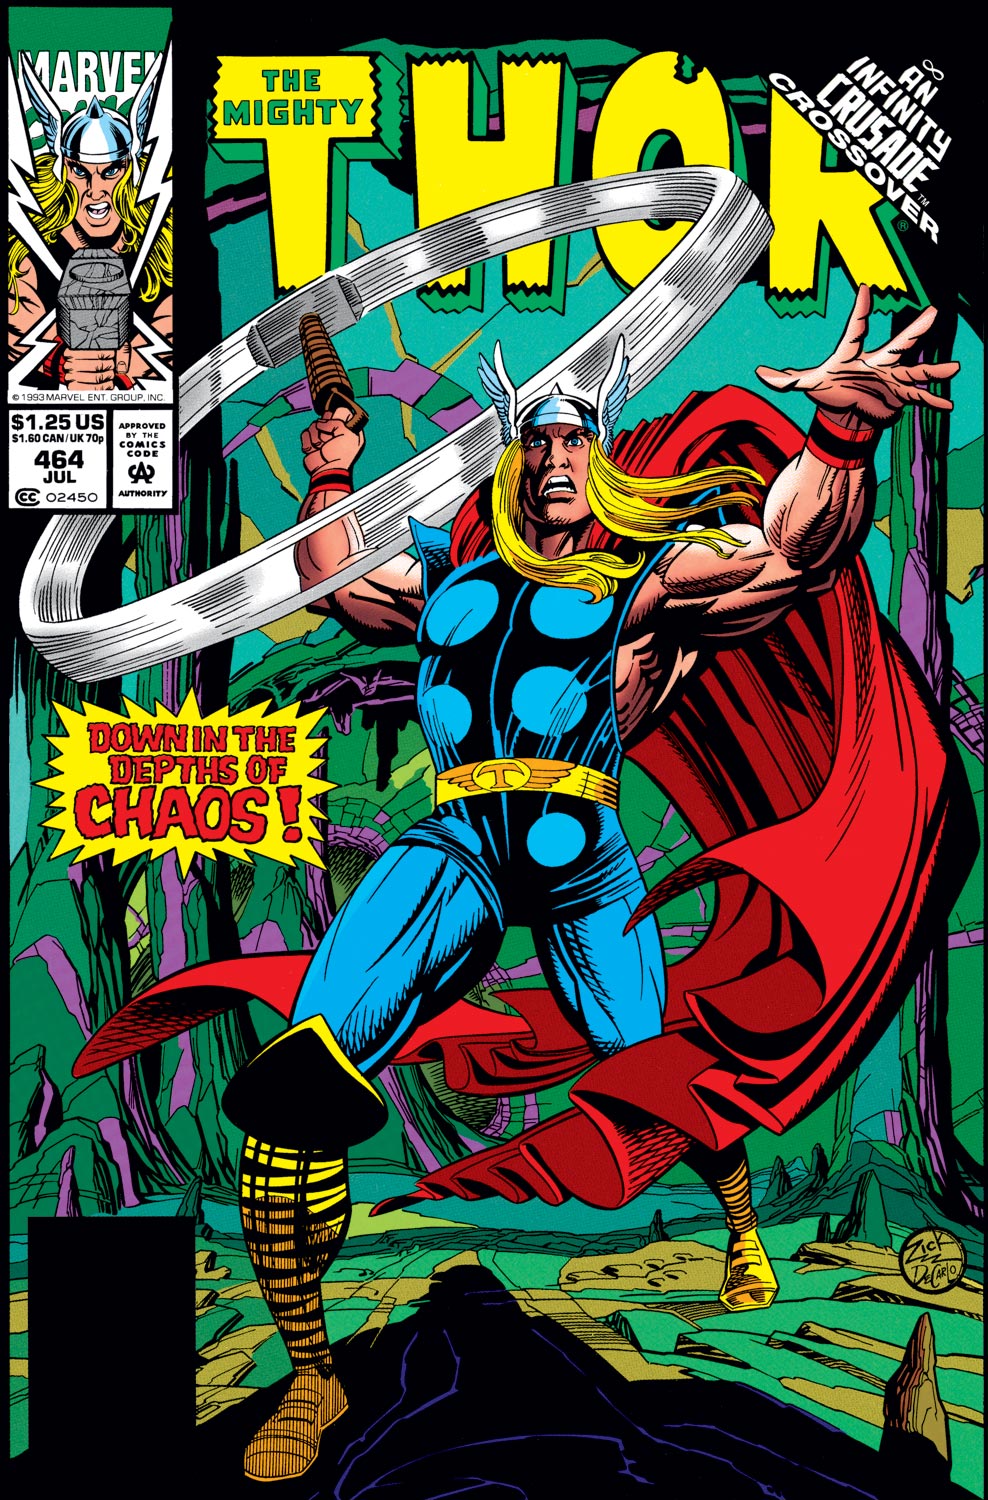 Thor (1966) #464